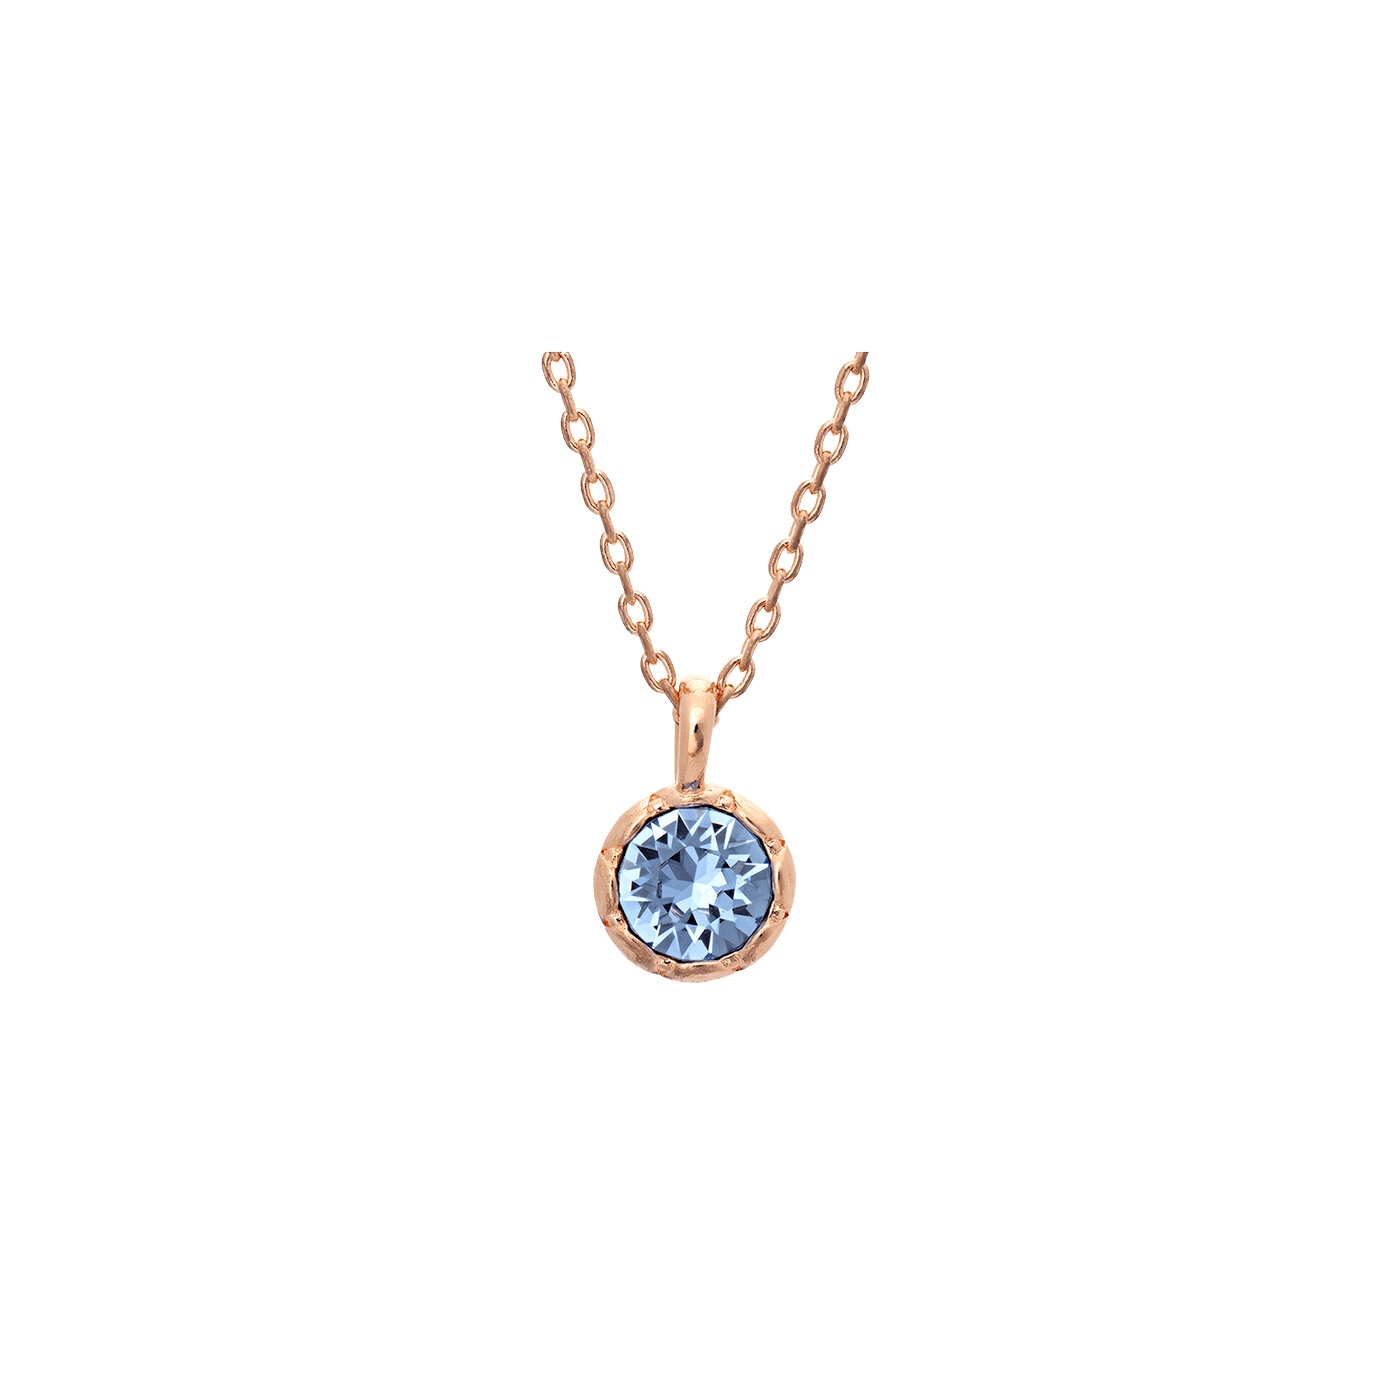 Petite Victoria necklace - Light sapphire